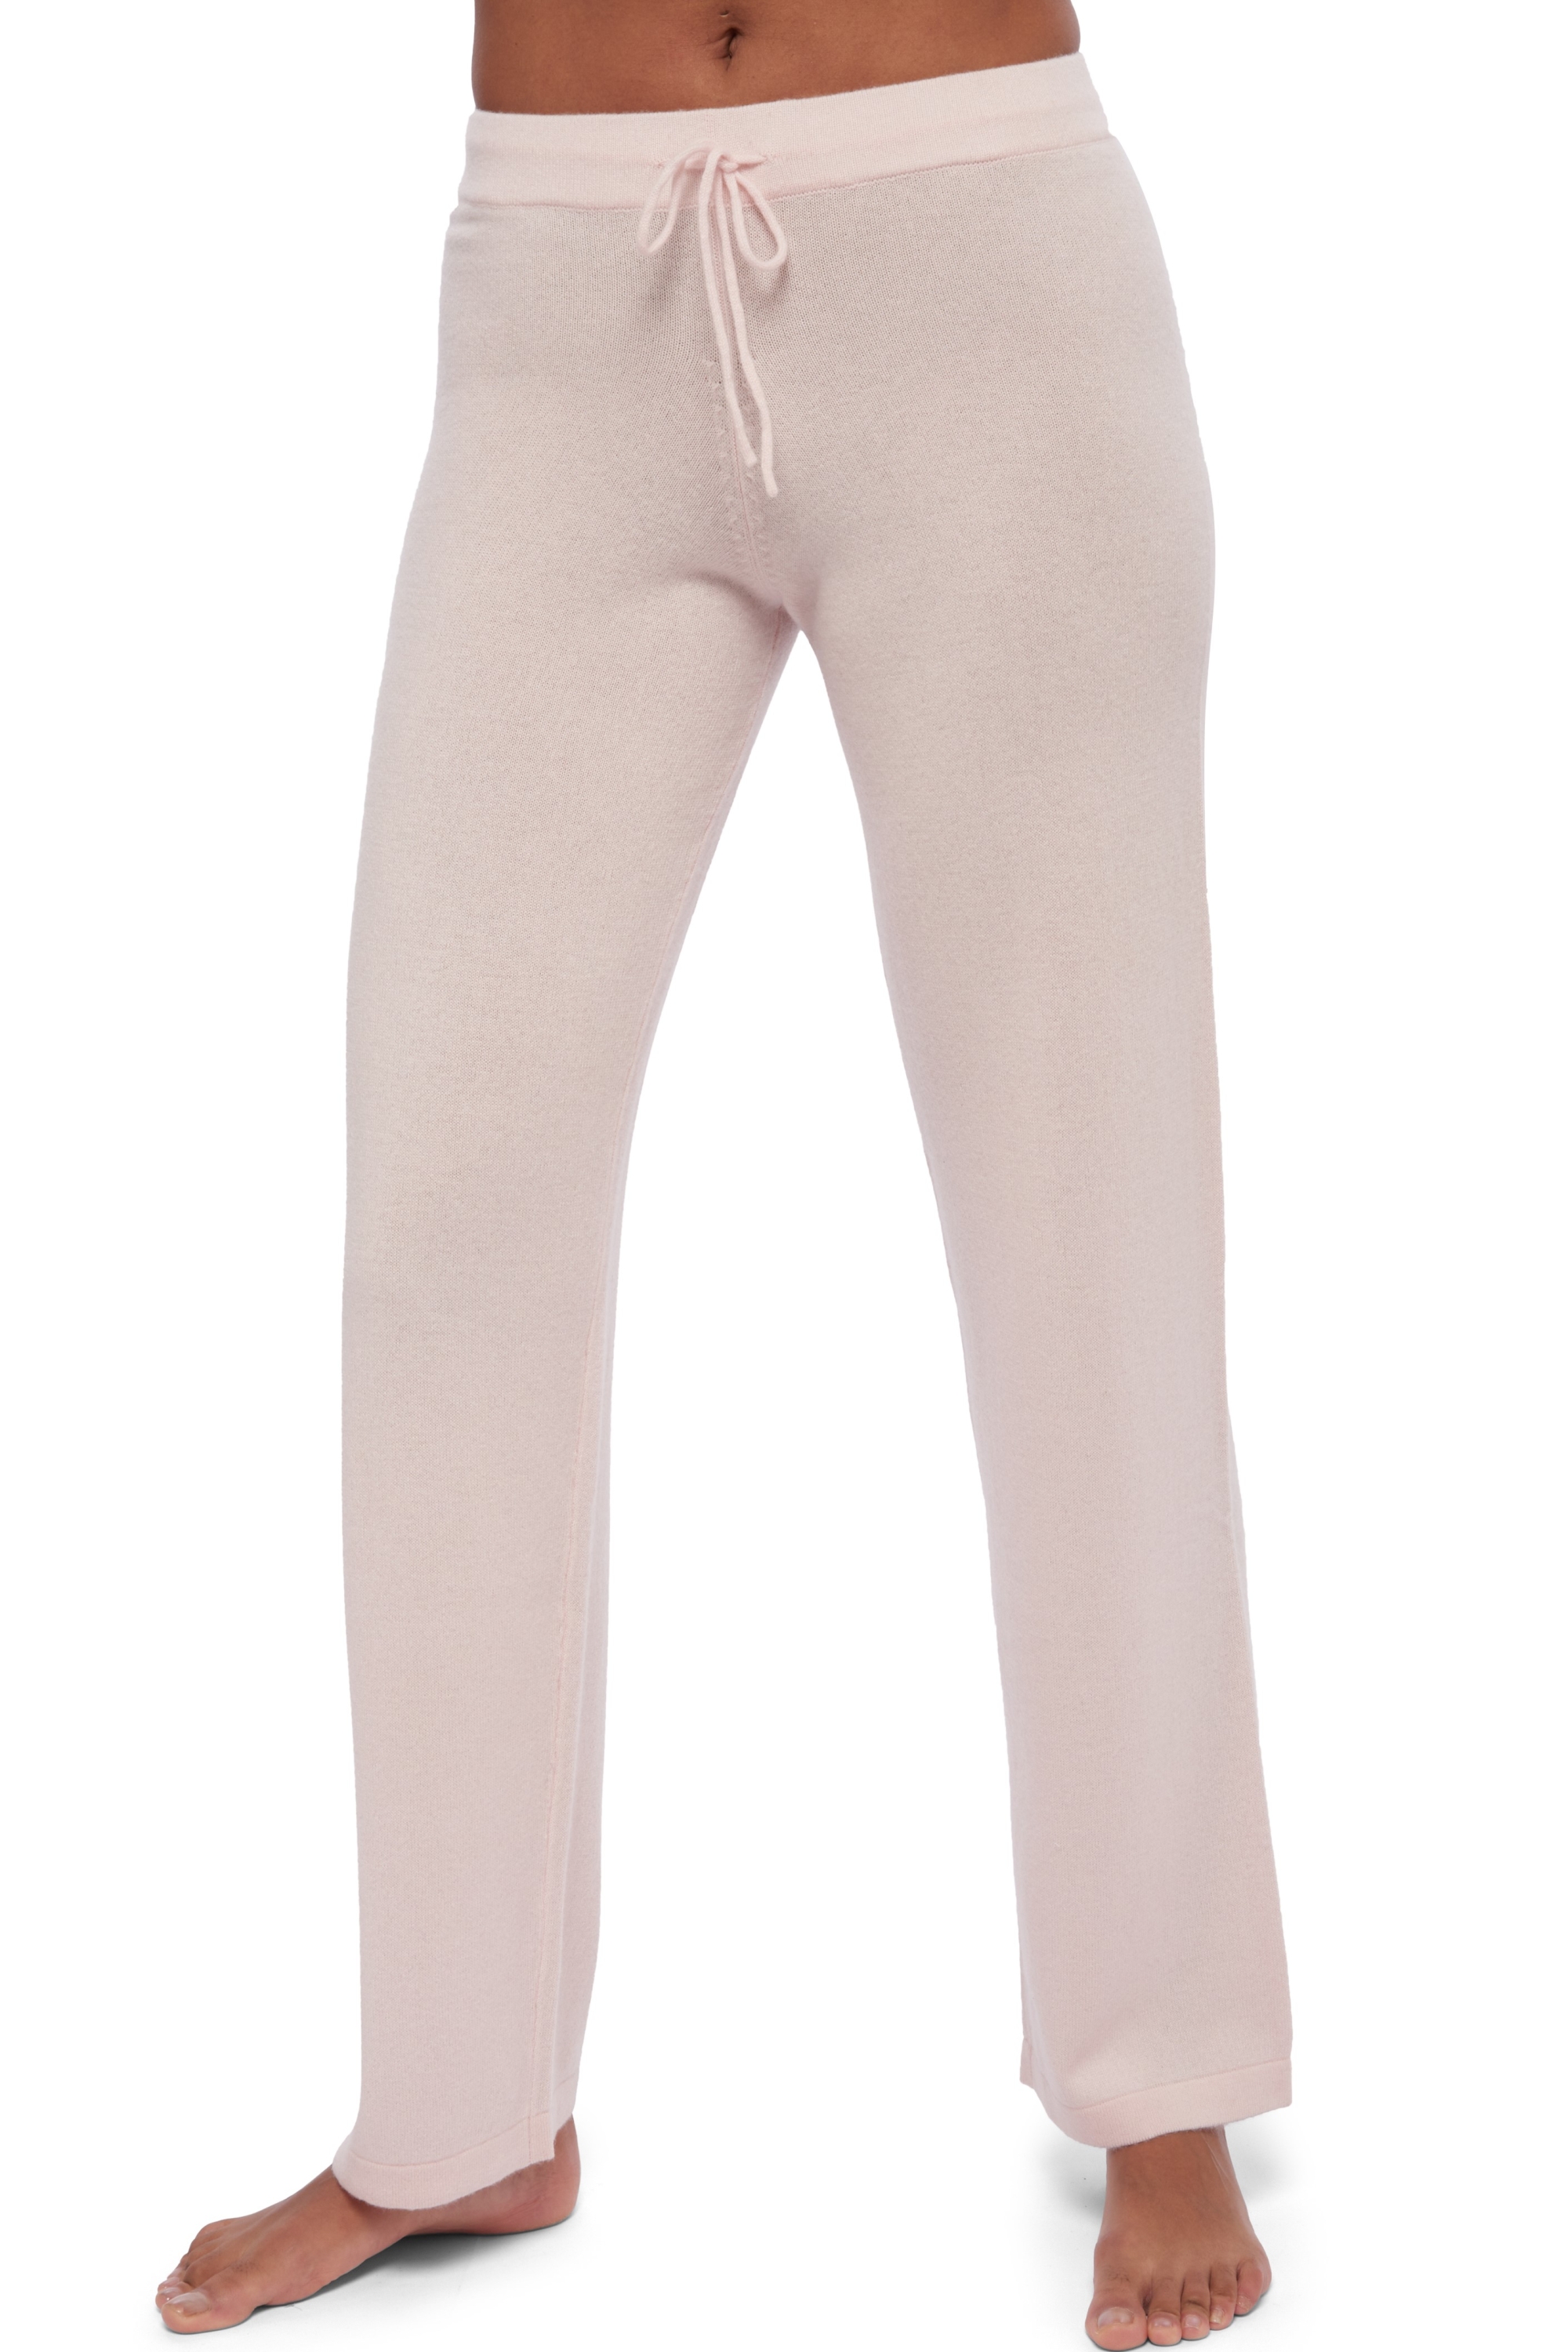 Cashmere cashmere donna pantaloni leggings malice rosa pallido m